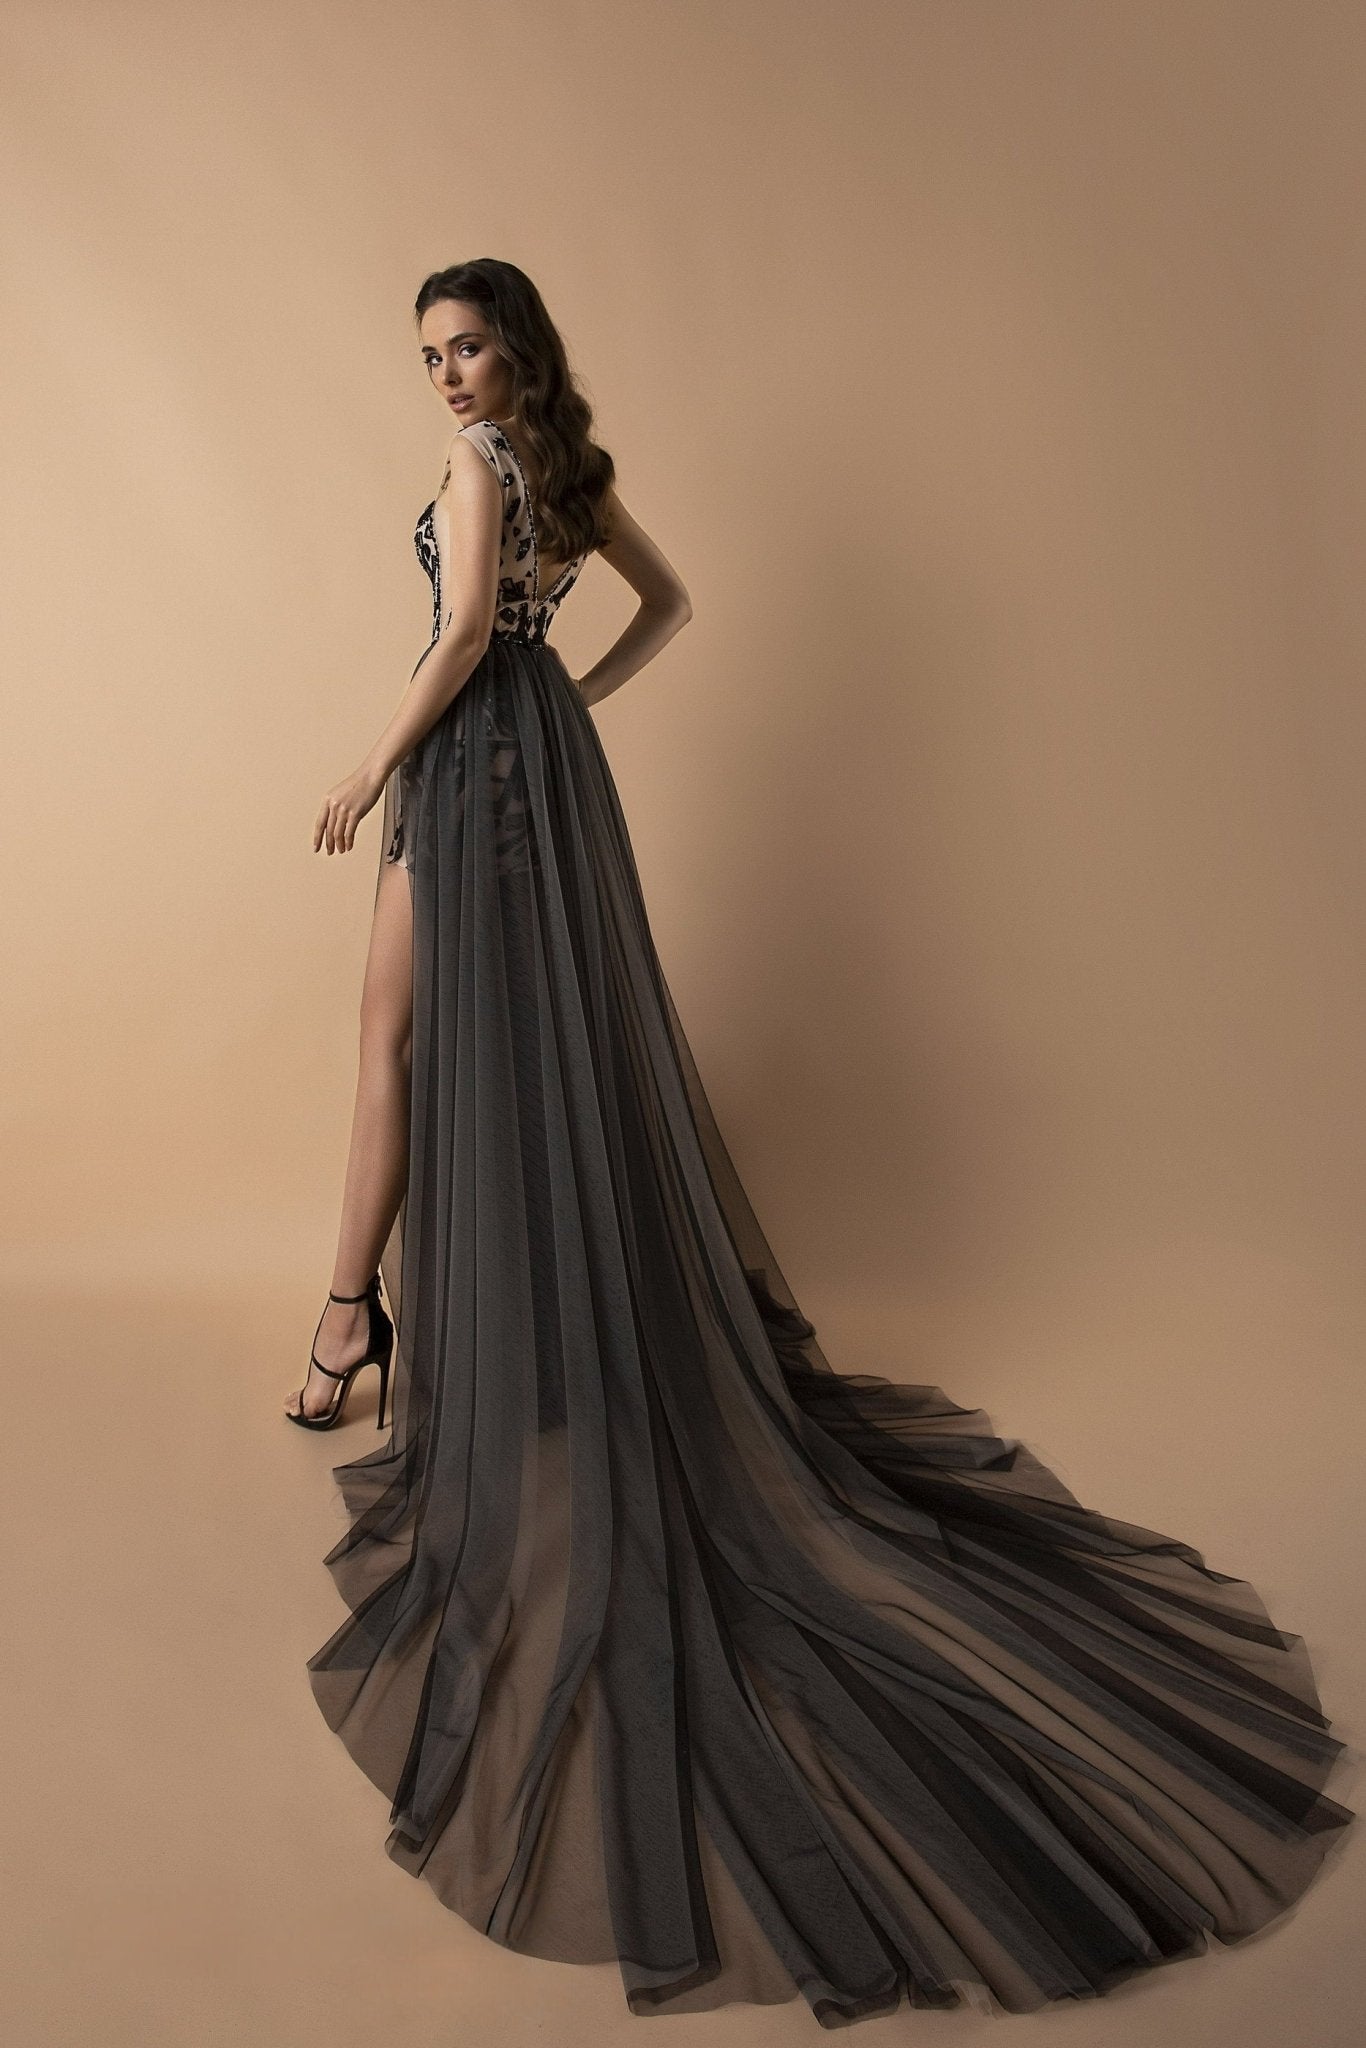 Versatile Silver And Nude Embroidered Sequin Convertible Evening Dress - Starlit Elegance Evening Dress Plus Size - WonderlandByLilian